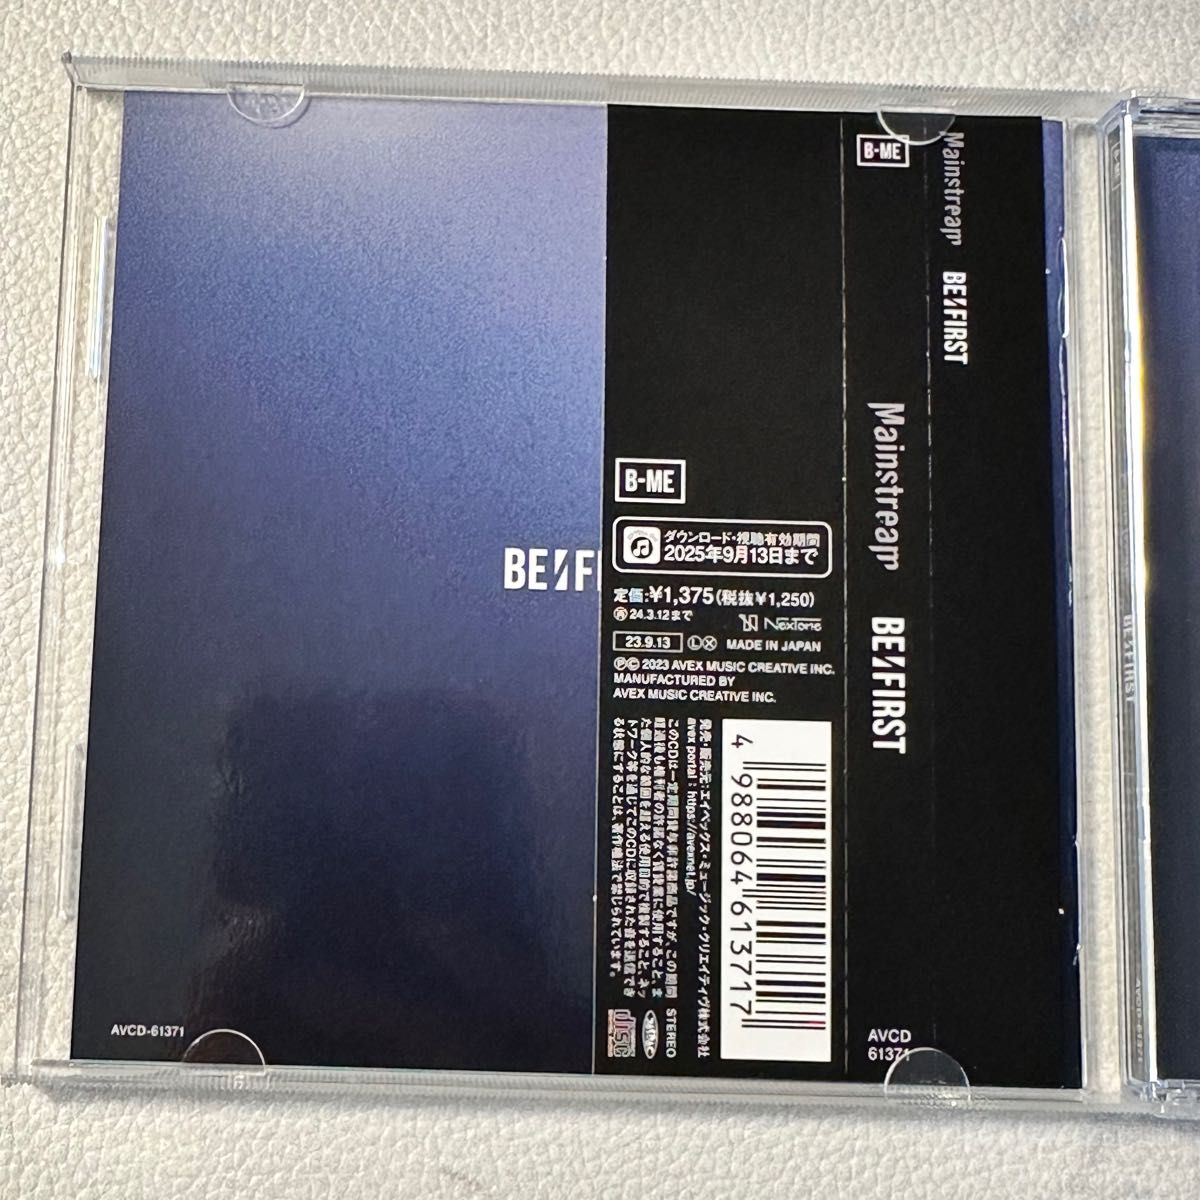 BE:FIRST / Mainstream CD+トレカセットRYOKI